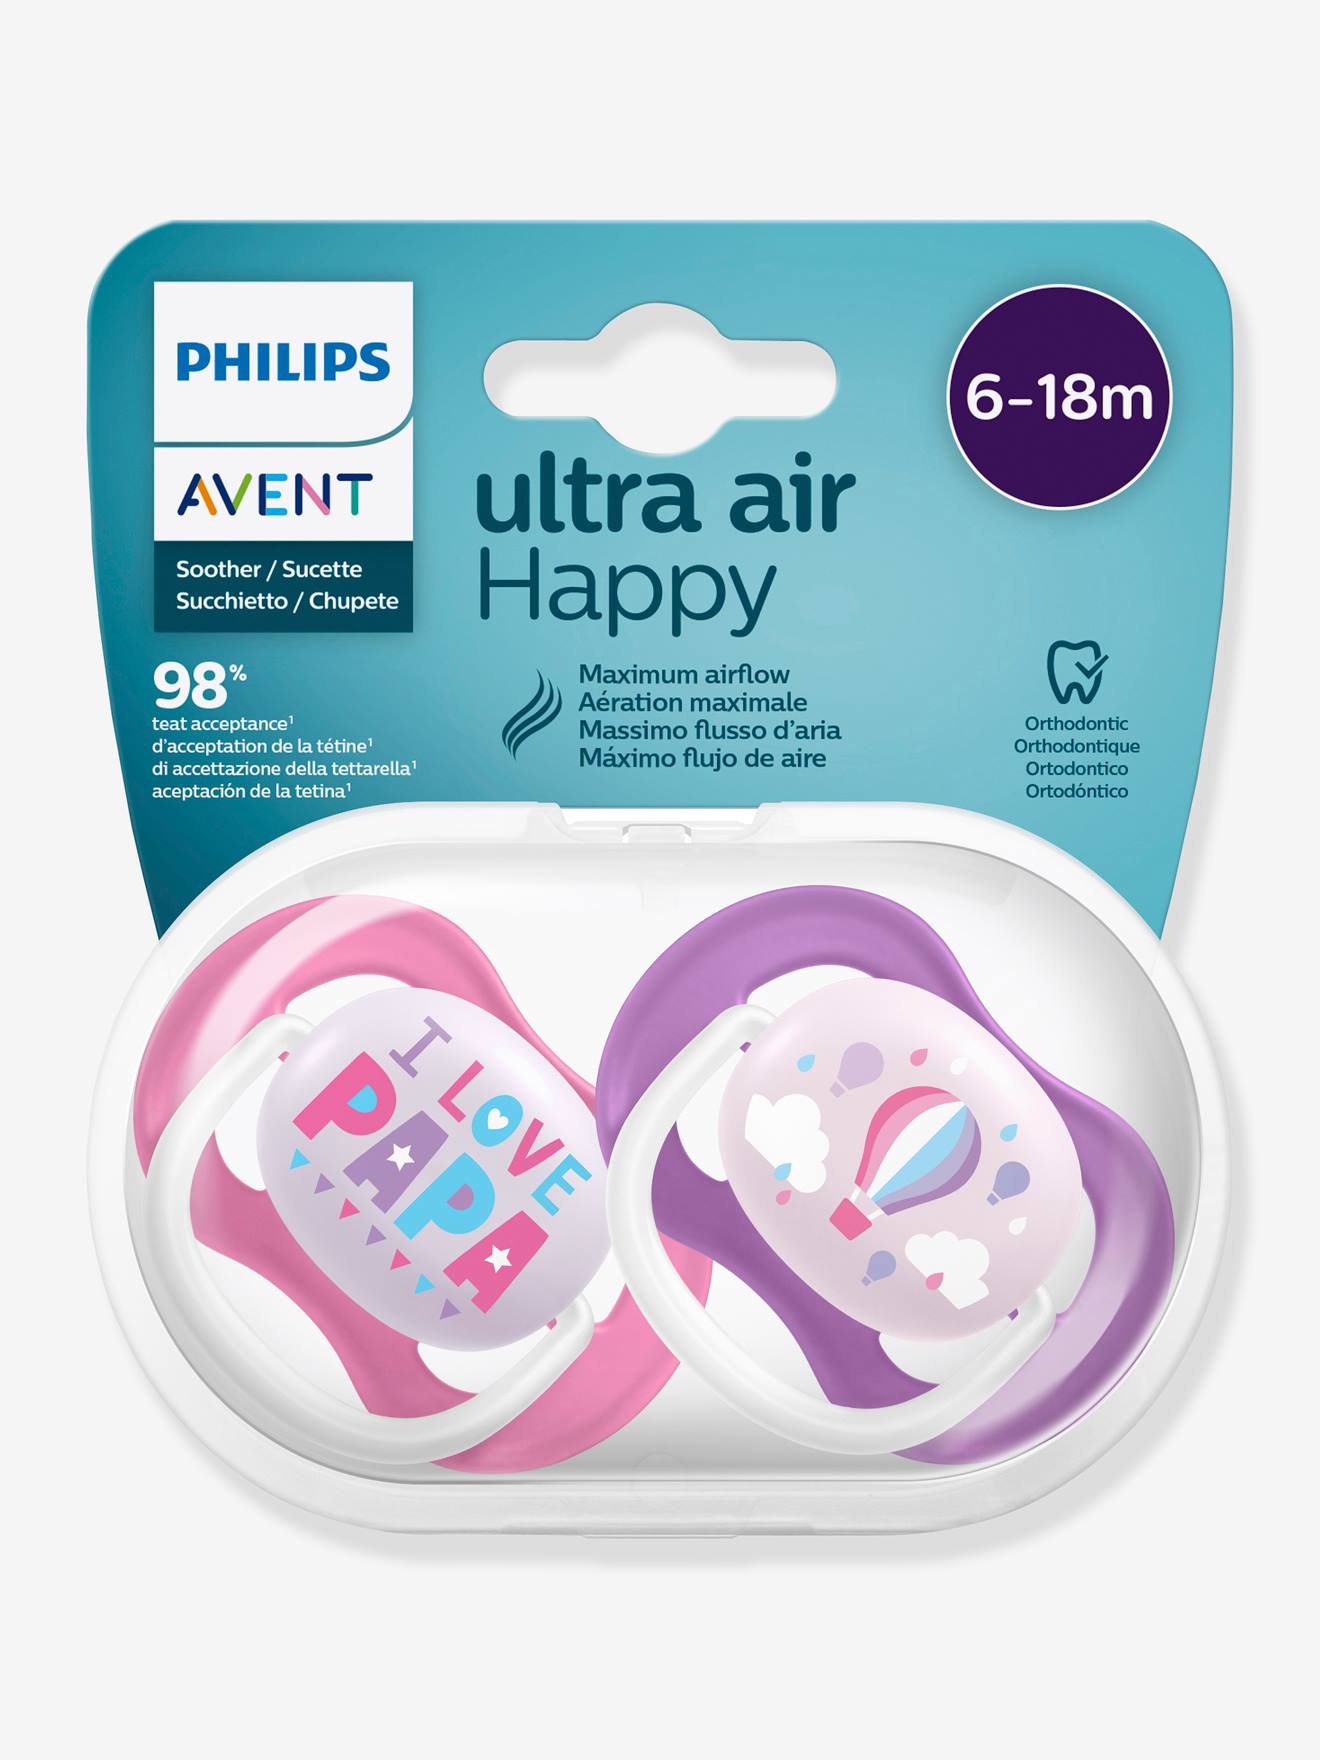 Chupetes Ultra Air Animals Niña 6-18 meses, Philips Avent